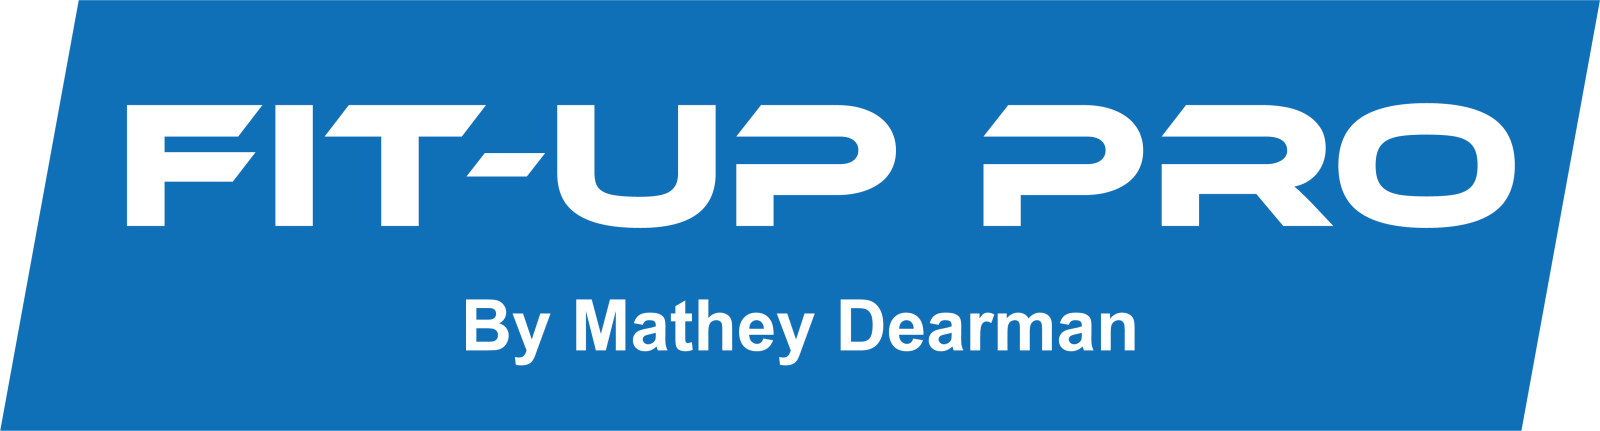 Fit-Up Pro by Mathey Dearman logo